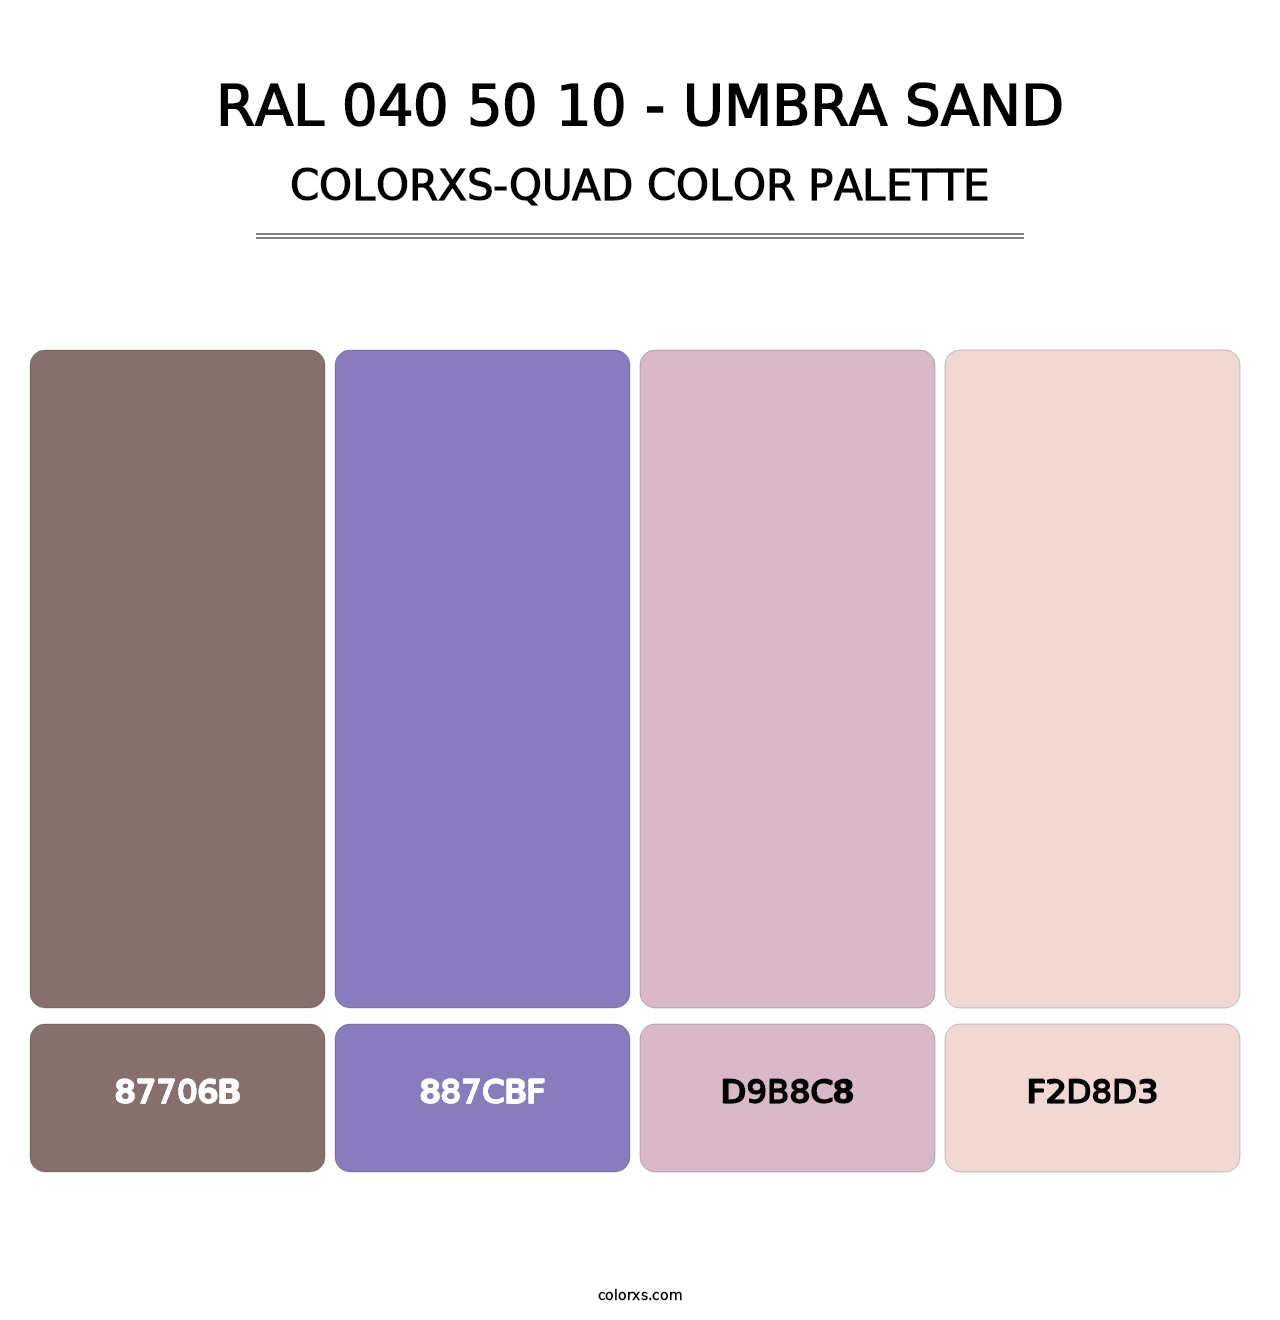 RAL 040 50 10 - Umbra Sand - Colorxs Quad Palette